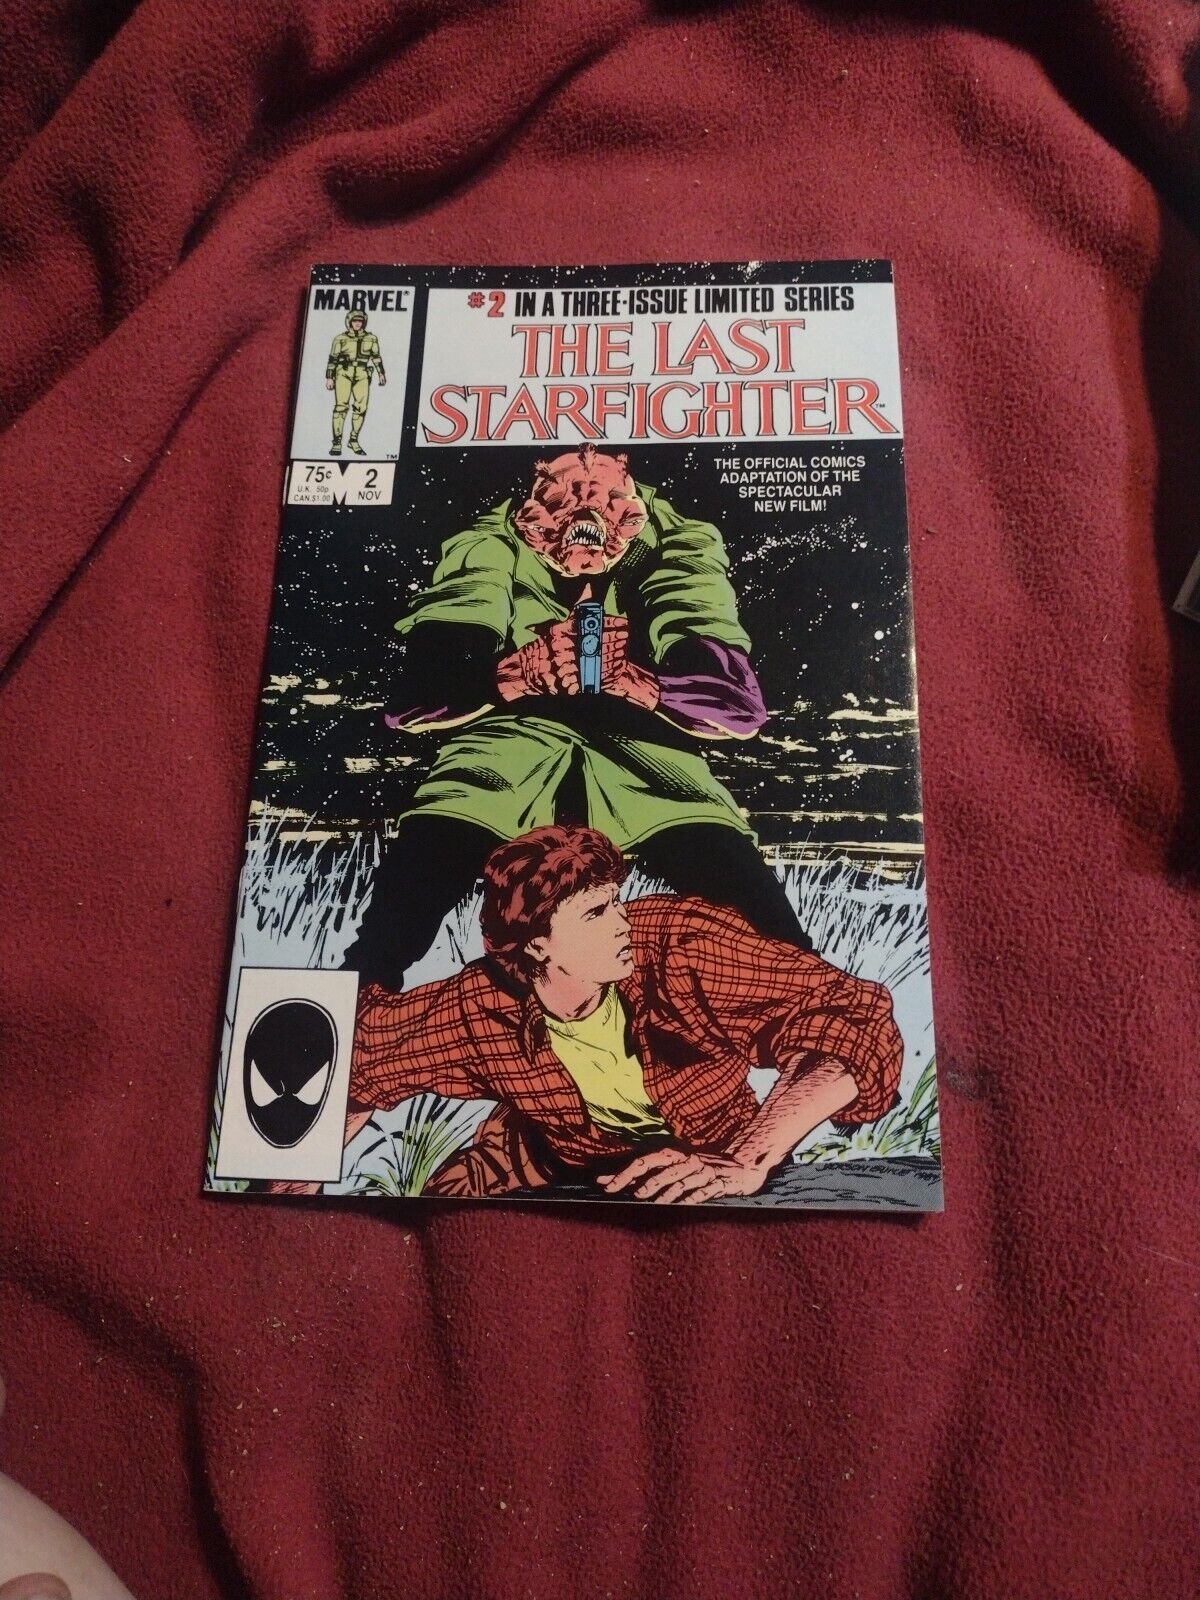 The Last Starfighter #2 (Marvel Comics November 1984)